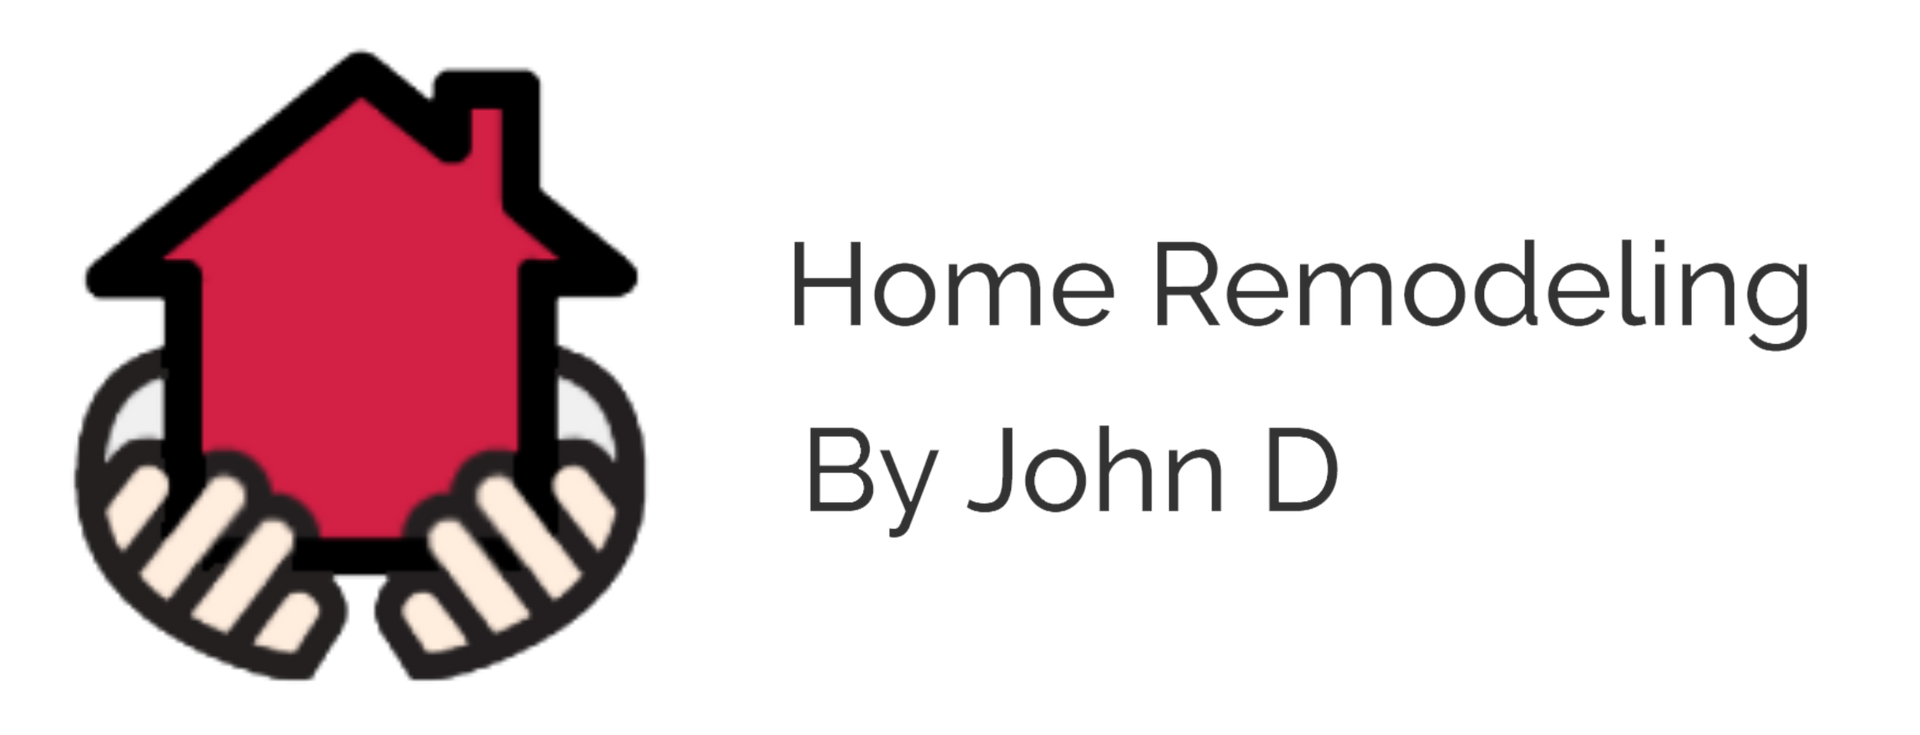 Home Remodeling by John D logo